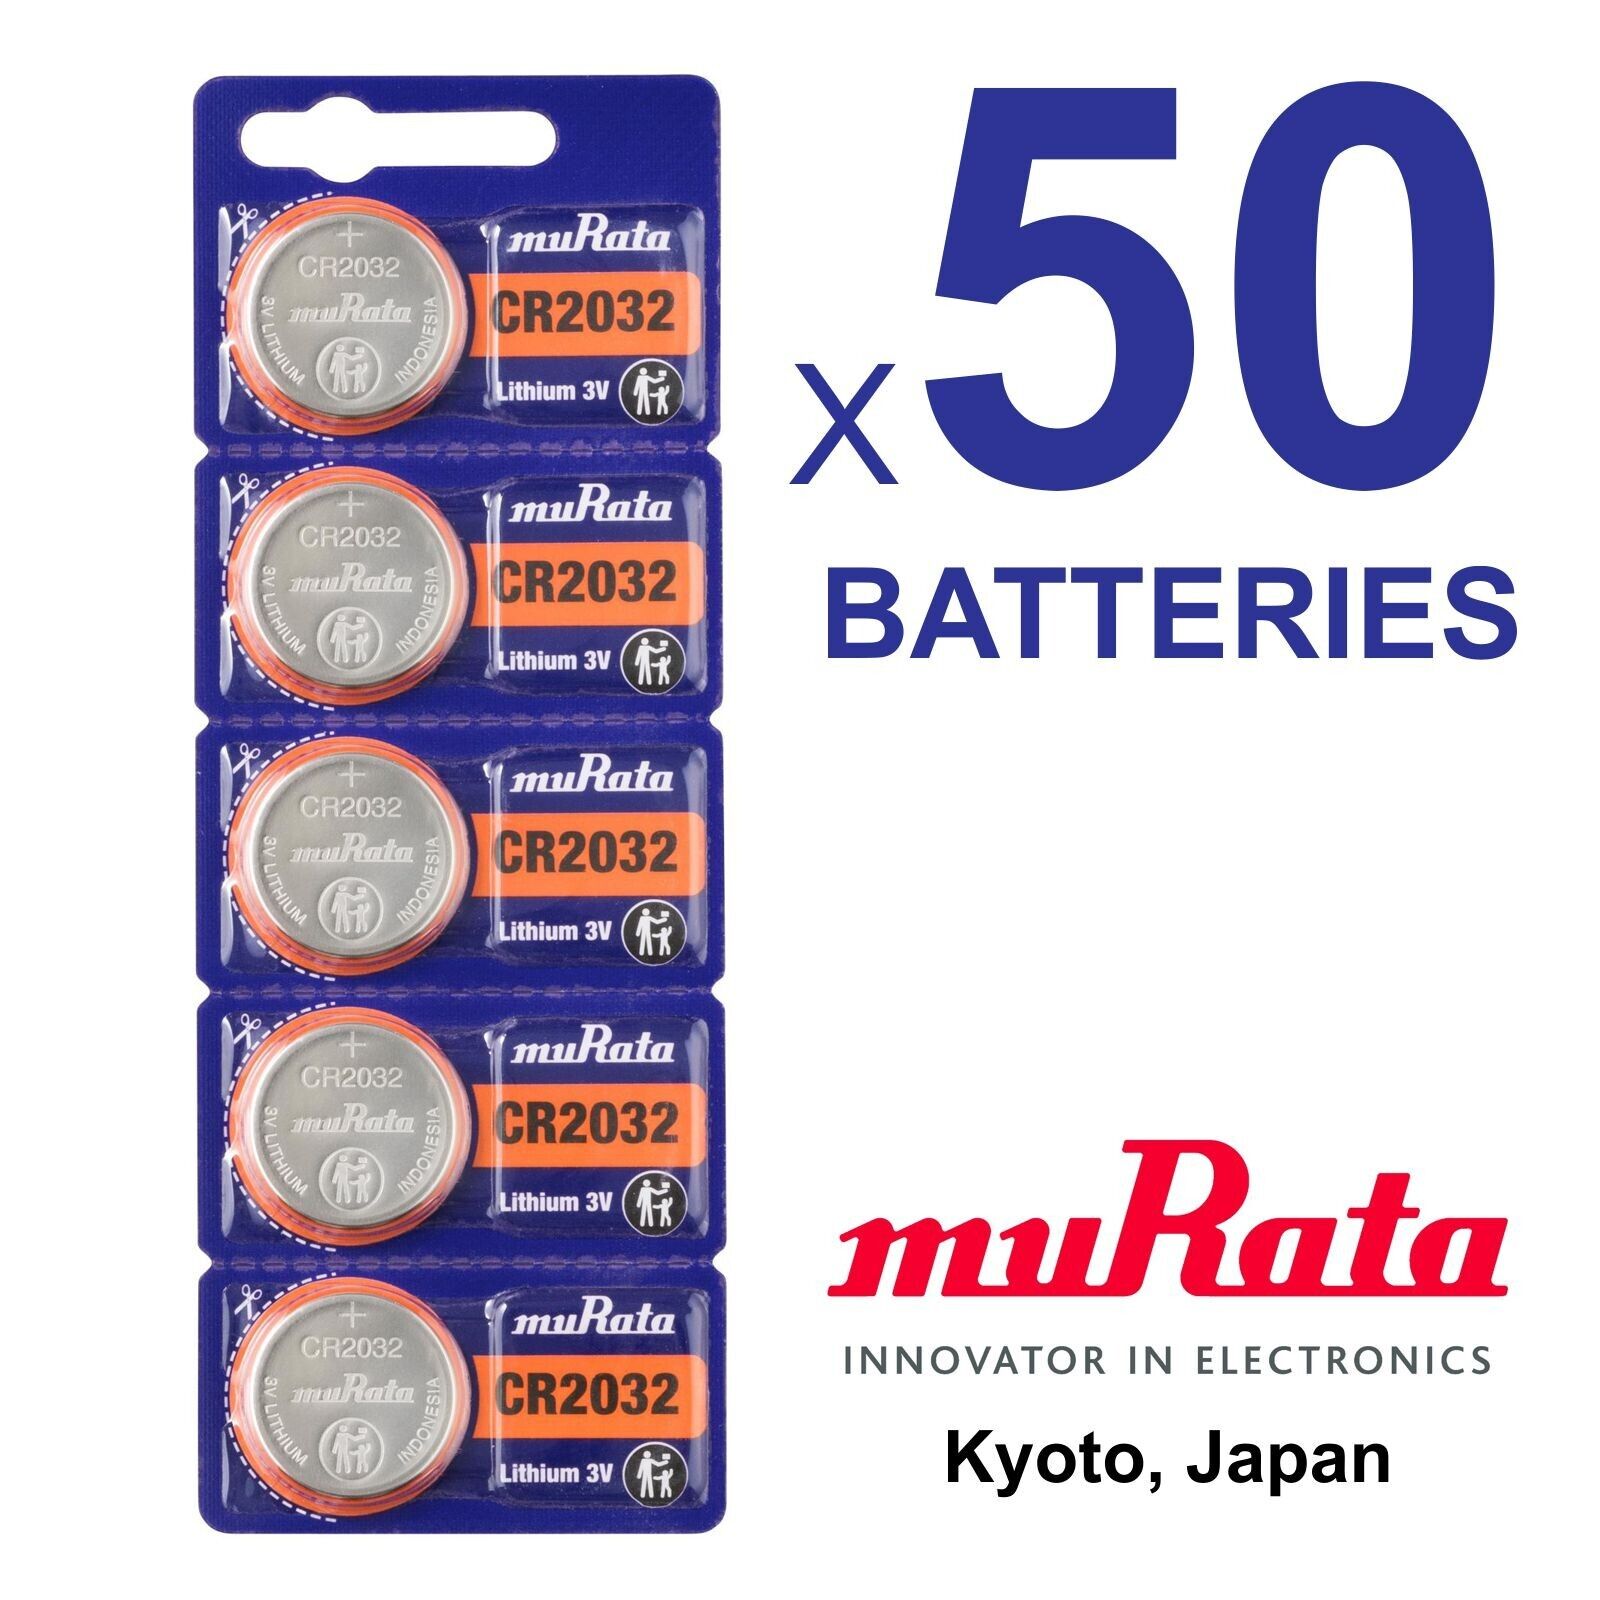 50 NEW MURATA / SONY CR2032 3V Lithium Battery FRESHLY NEW Expire 10 Years 2032 Murata CR2032